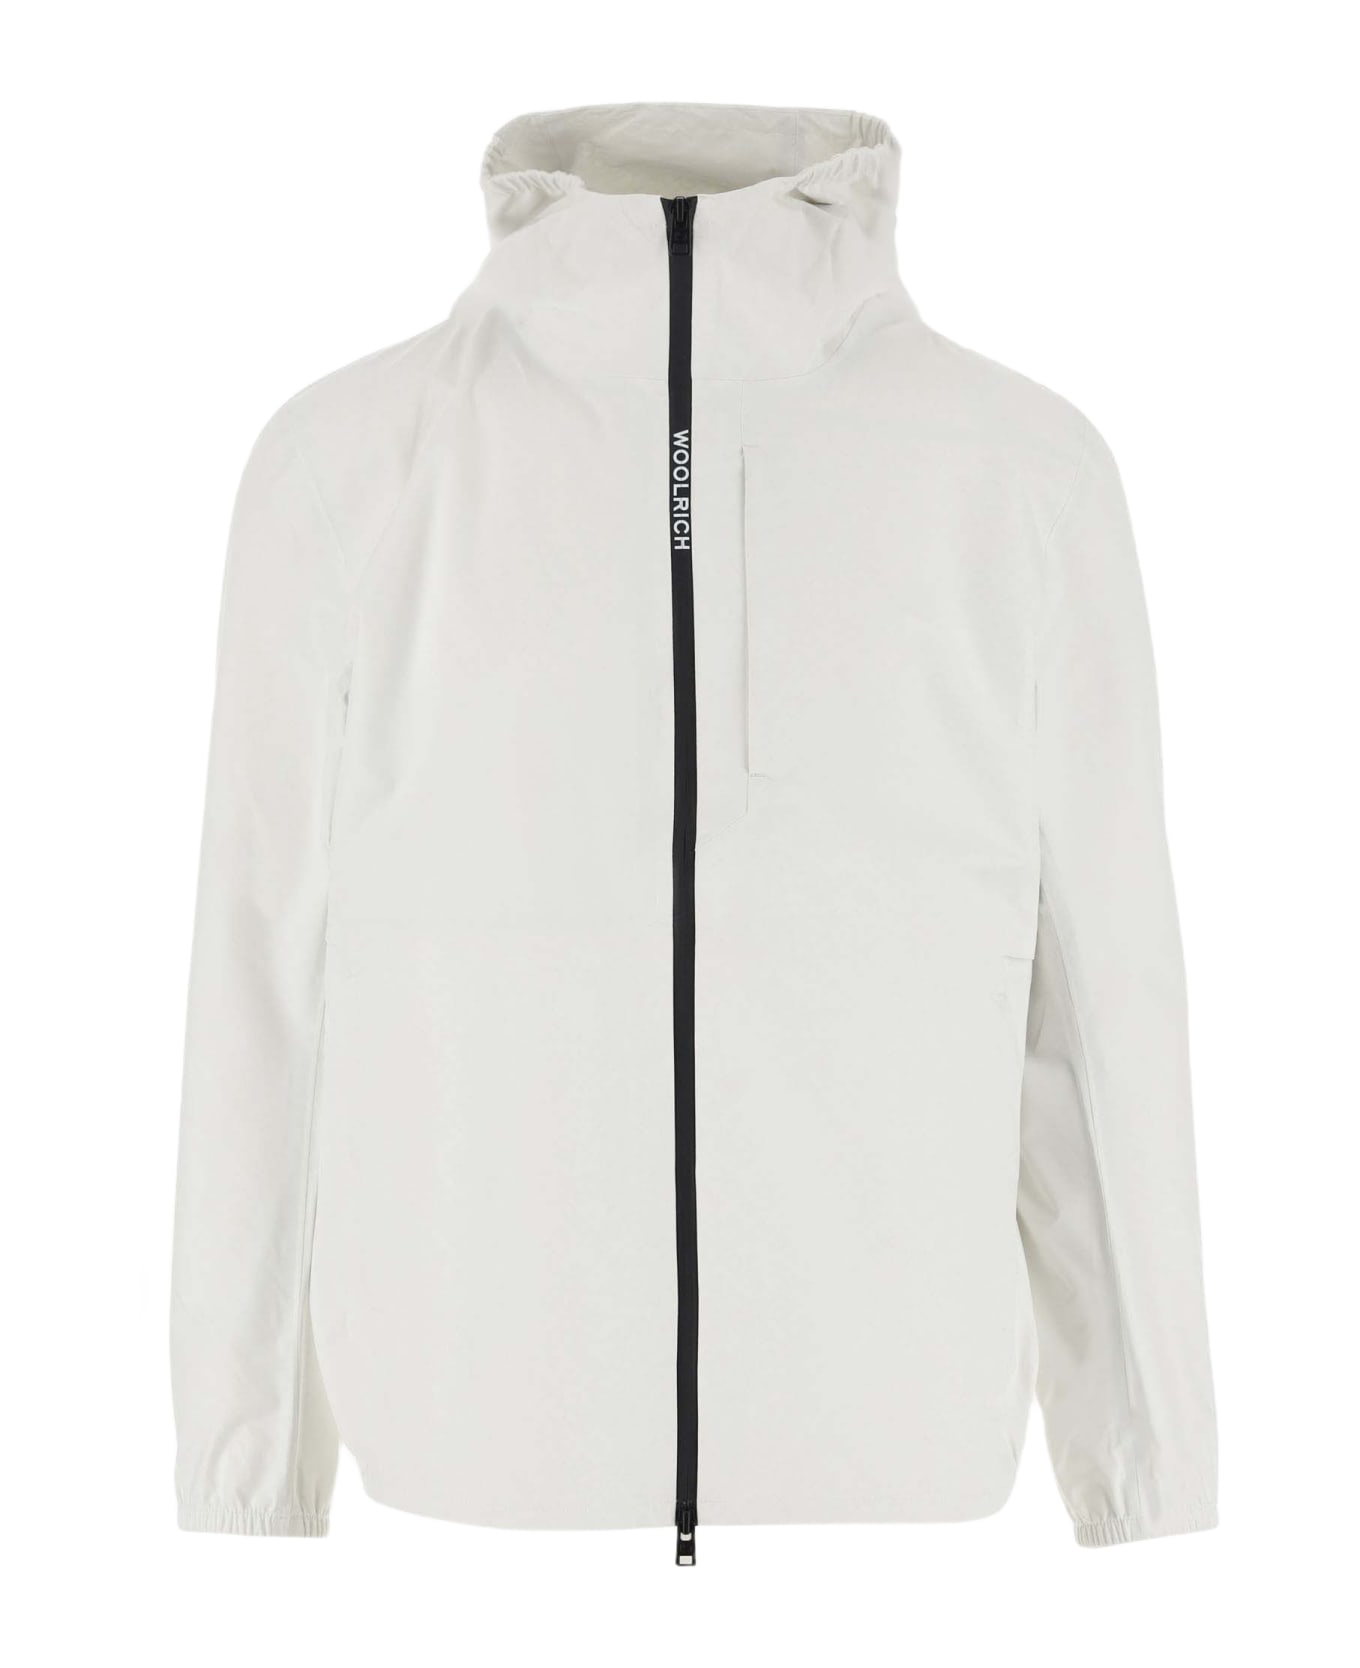 Woolrich Pacific Waterproof Jacket With Hood - White